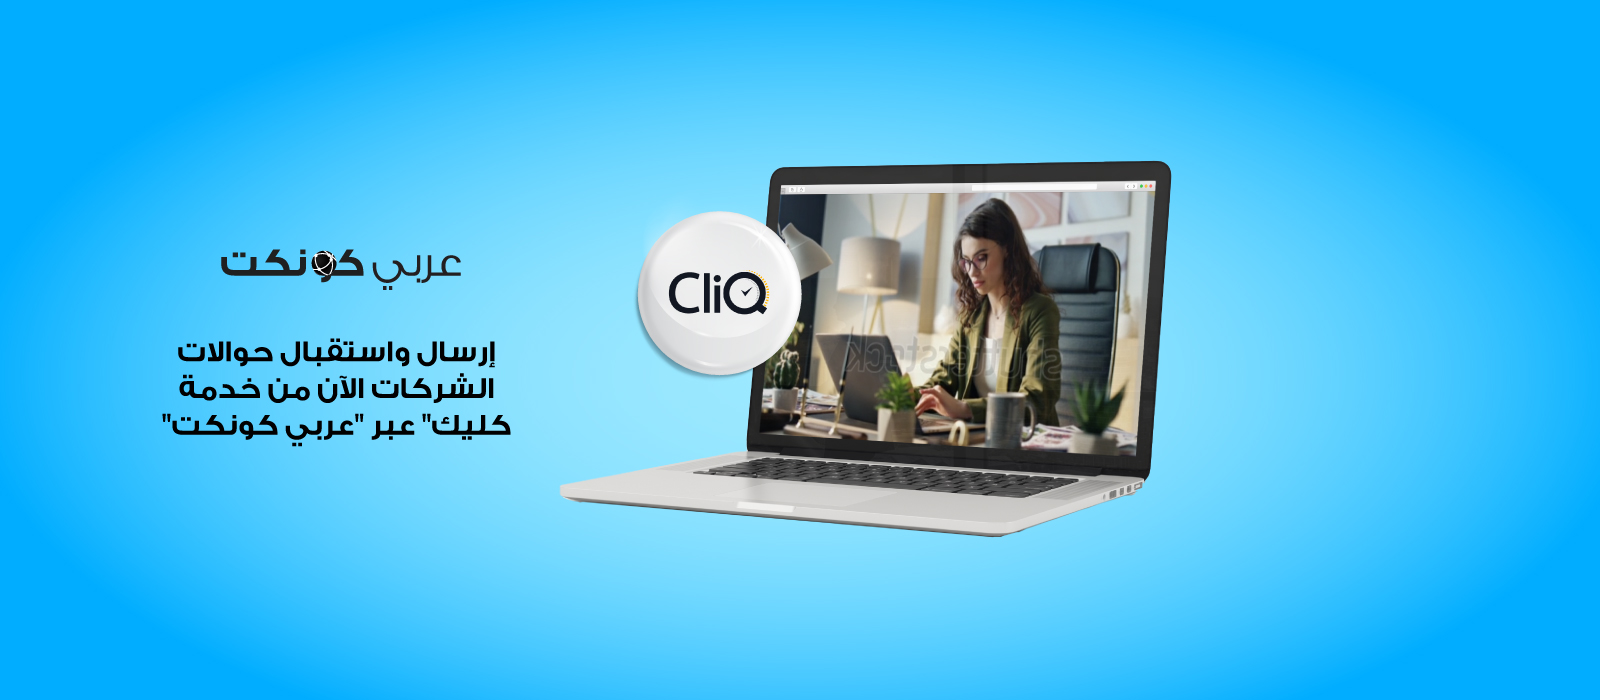 34933-Adding-CliQ-to-Arabi-Connect-Platform-Announcement-Campaign-website-banner-ARABIC